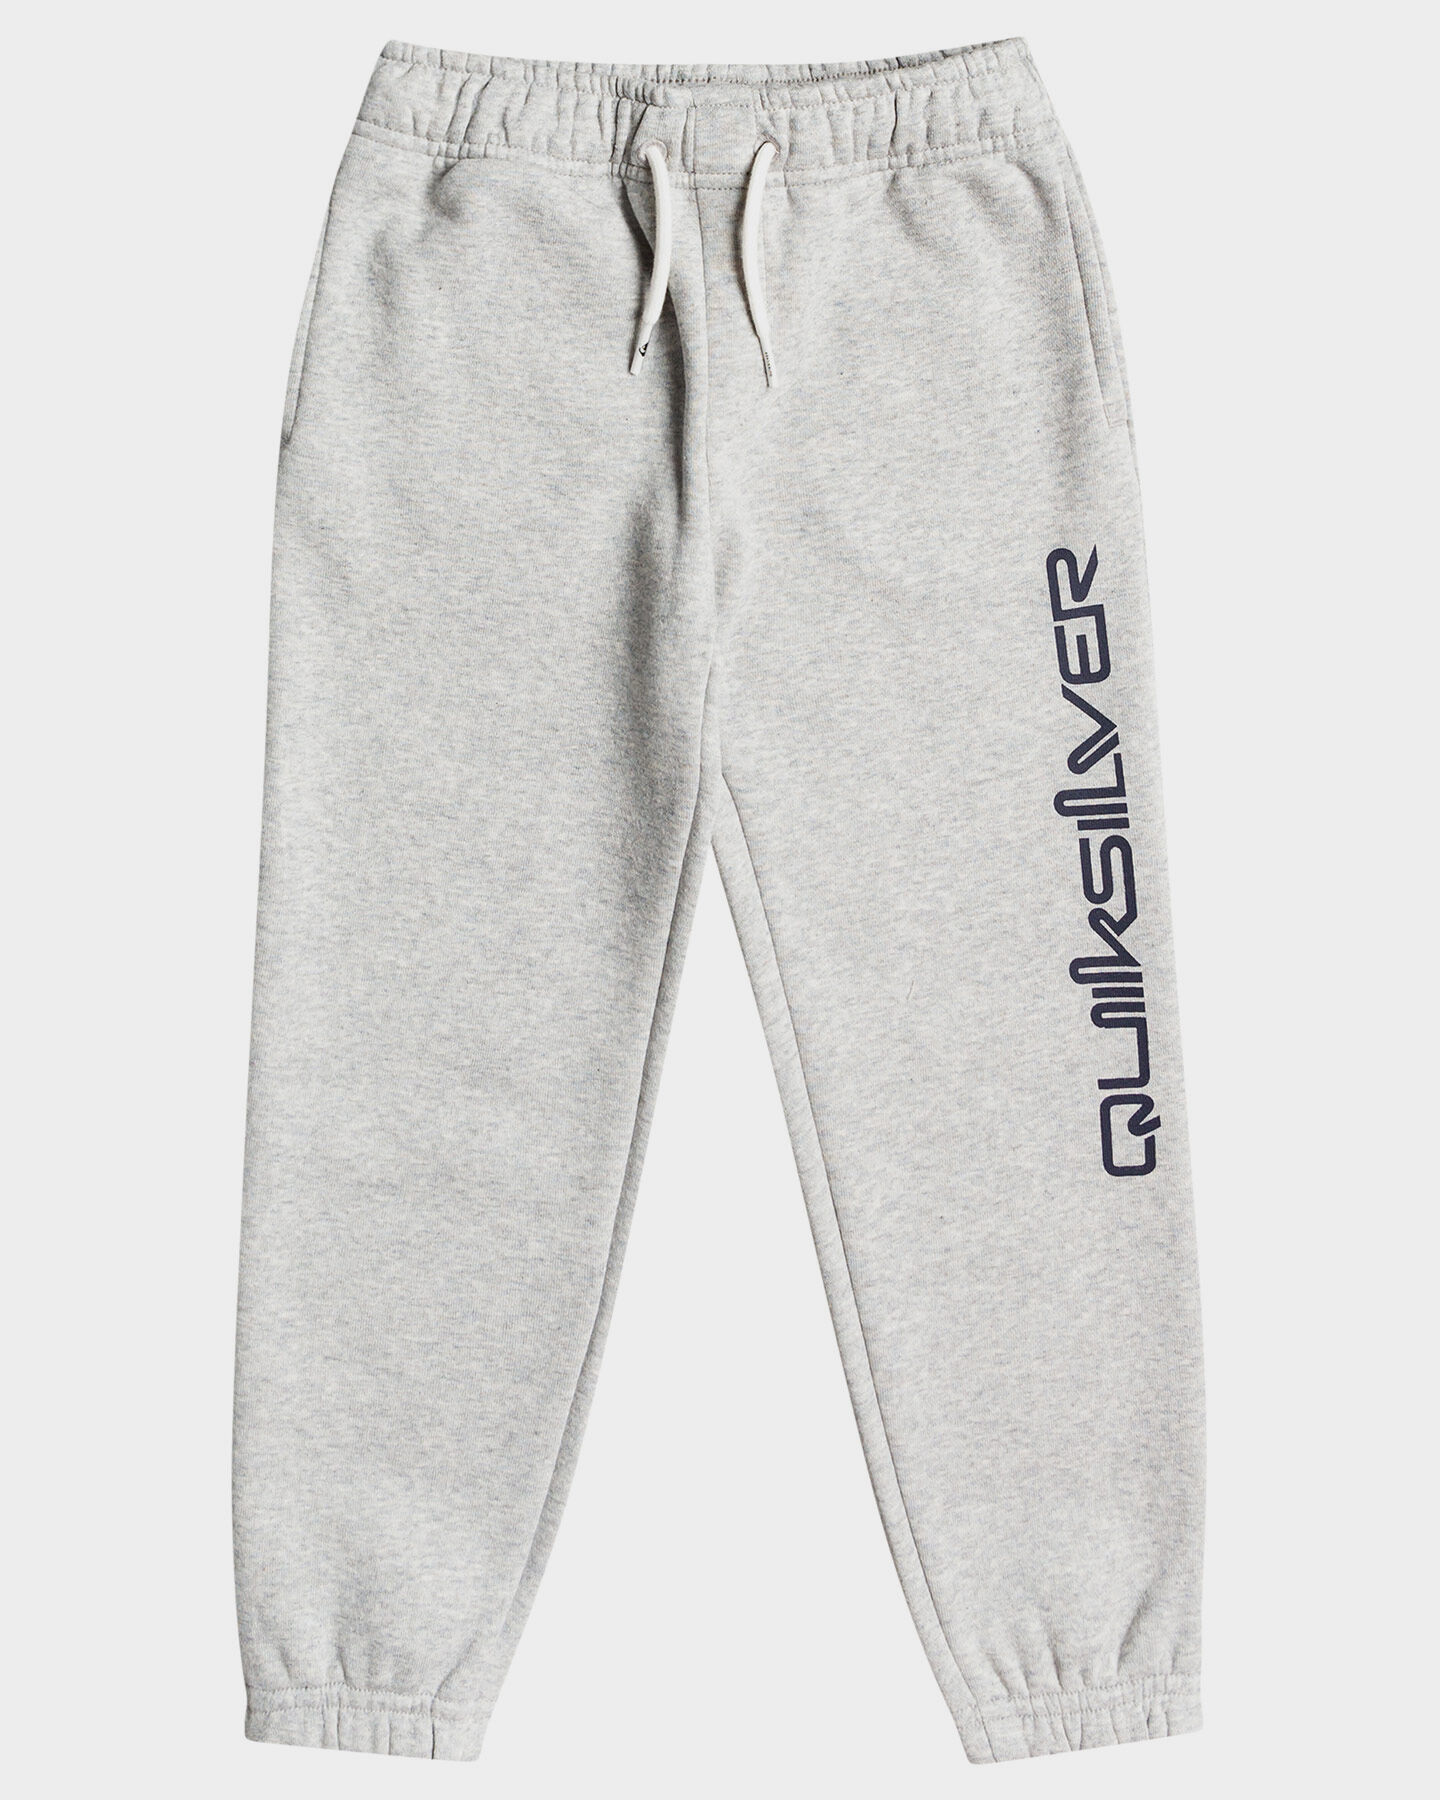 Quiksilver Smash & Grab Fleece Pant Sweatpants Grey Size S